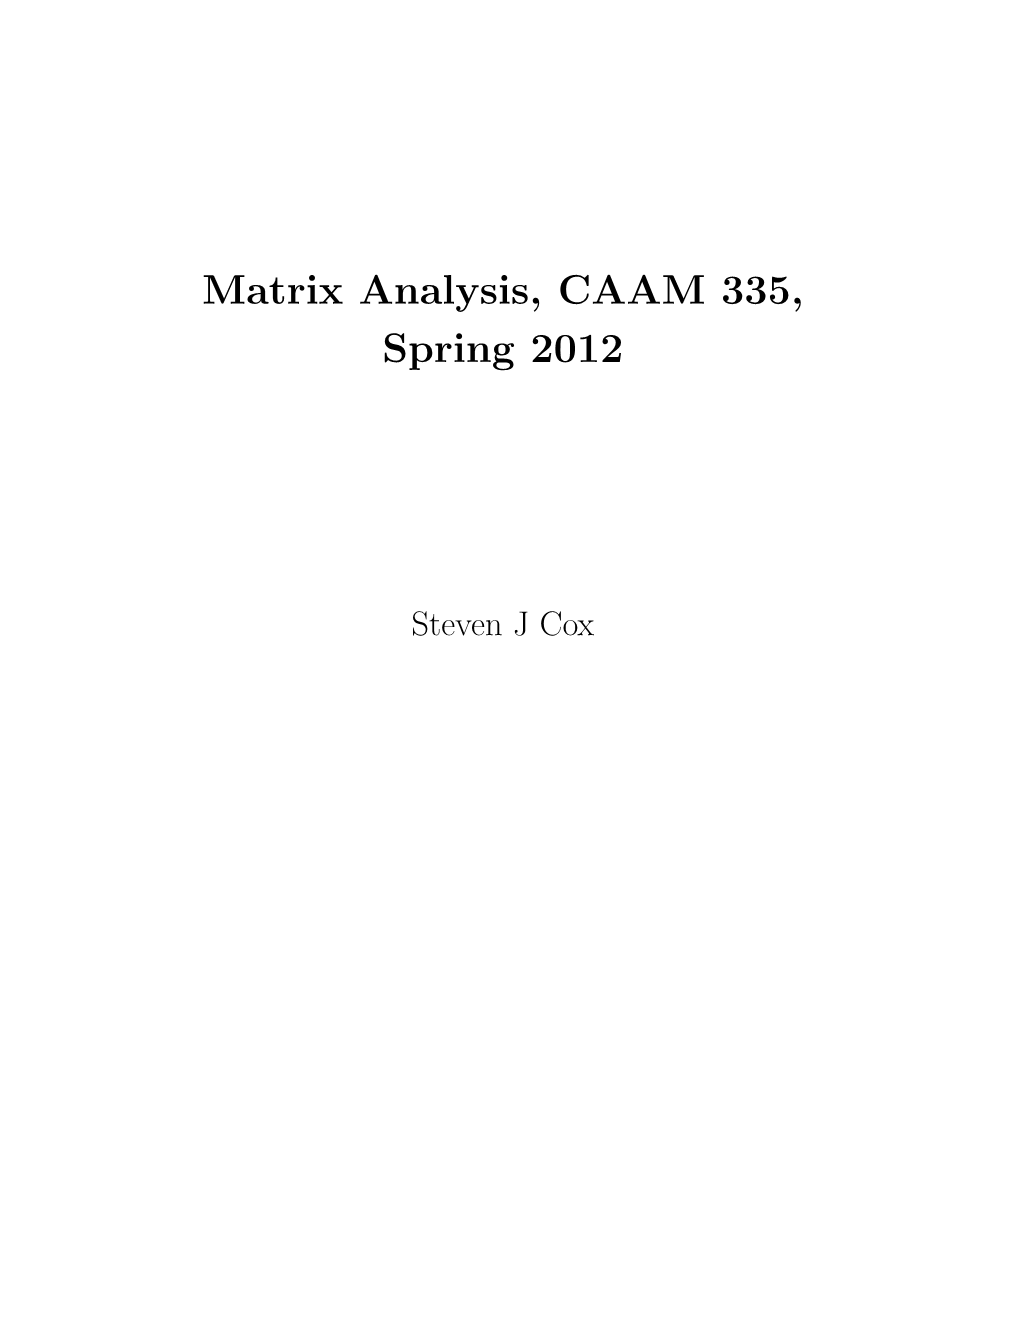 Matrix Analysis, CAAM 335, Spring 2012